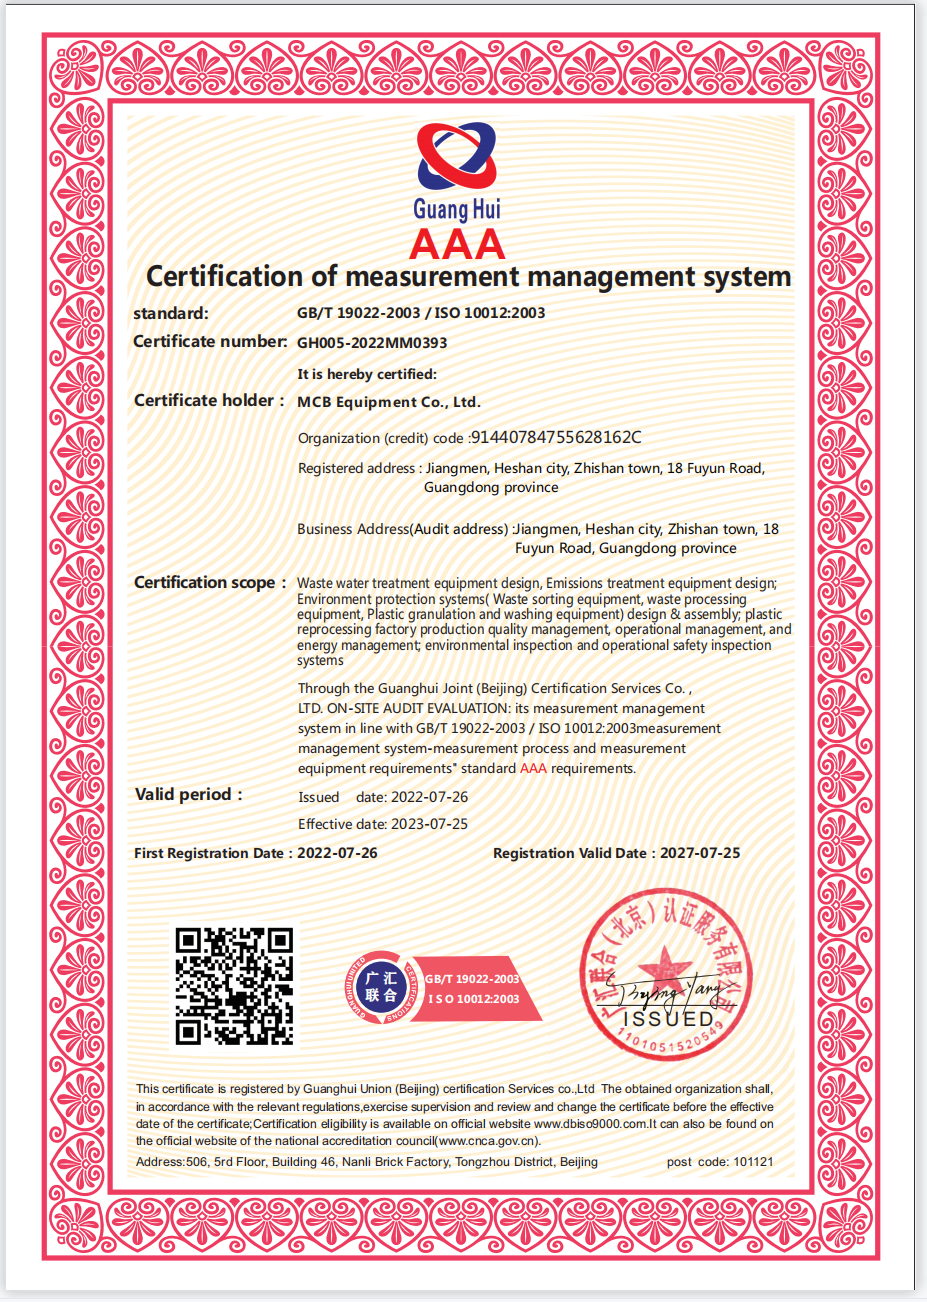 Measurement management system certification certificate